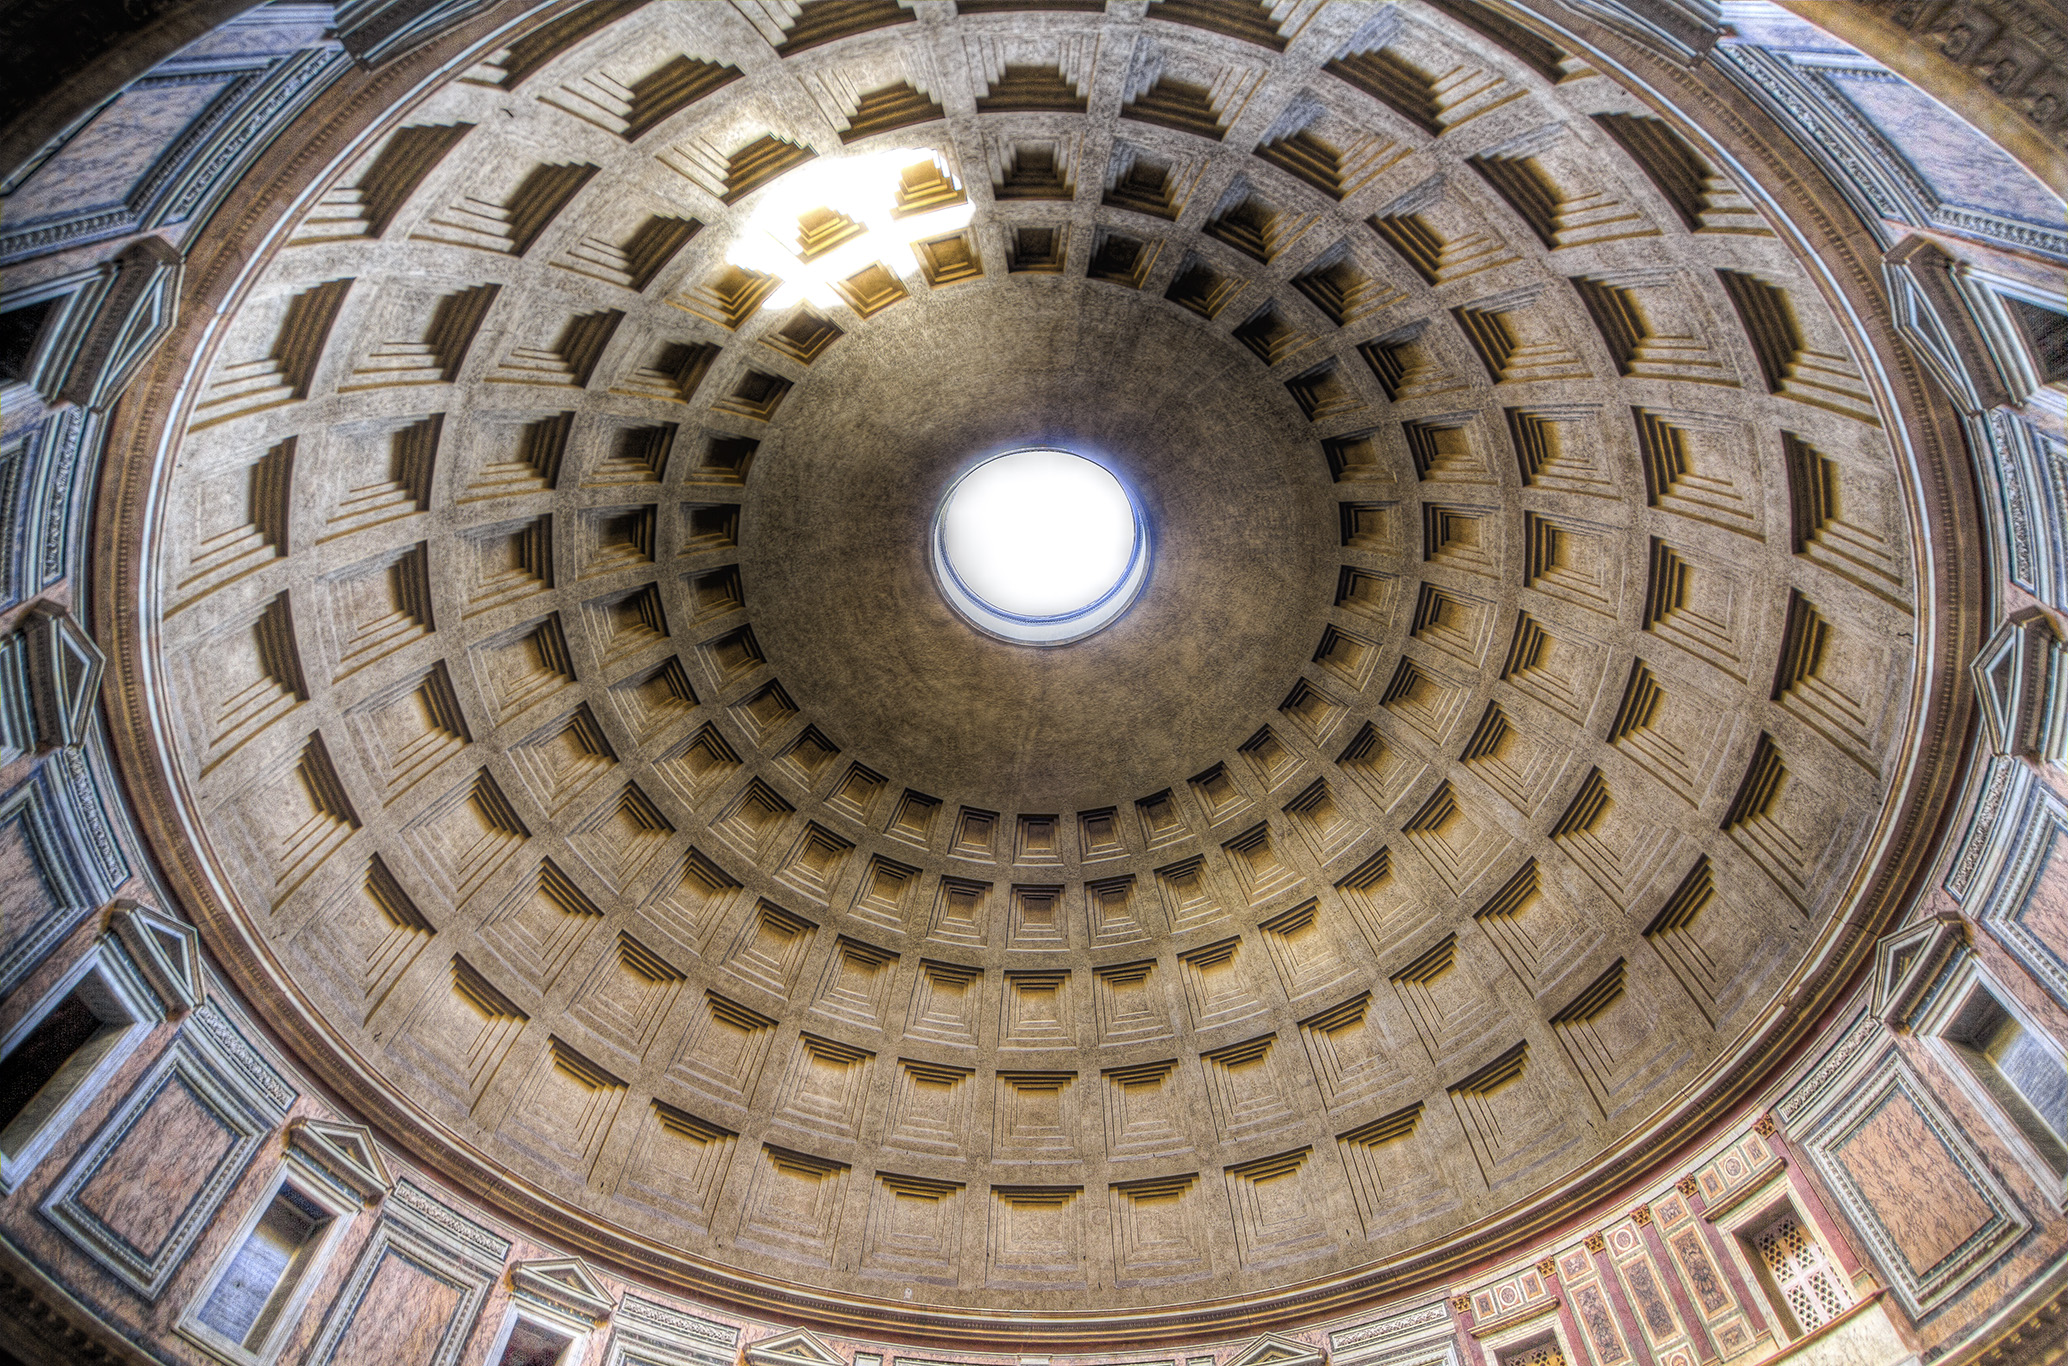  Pantheon Oculus, Rome 